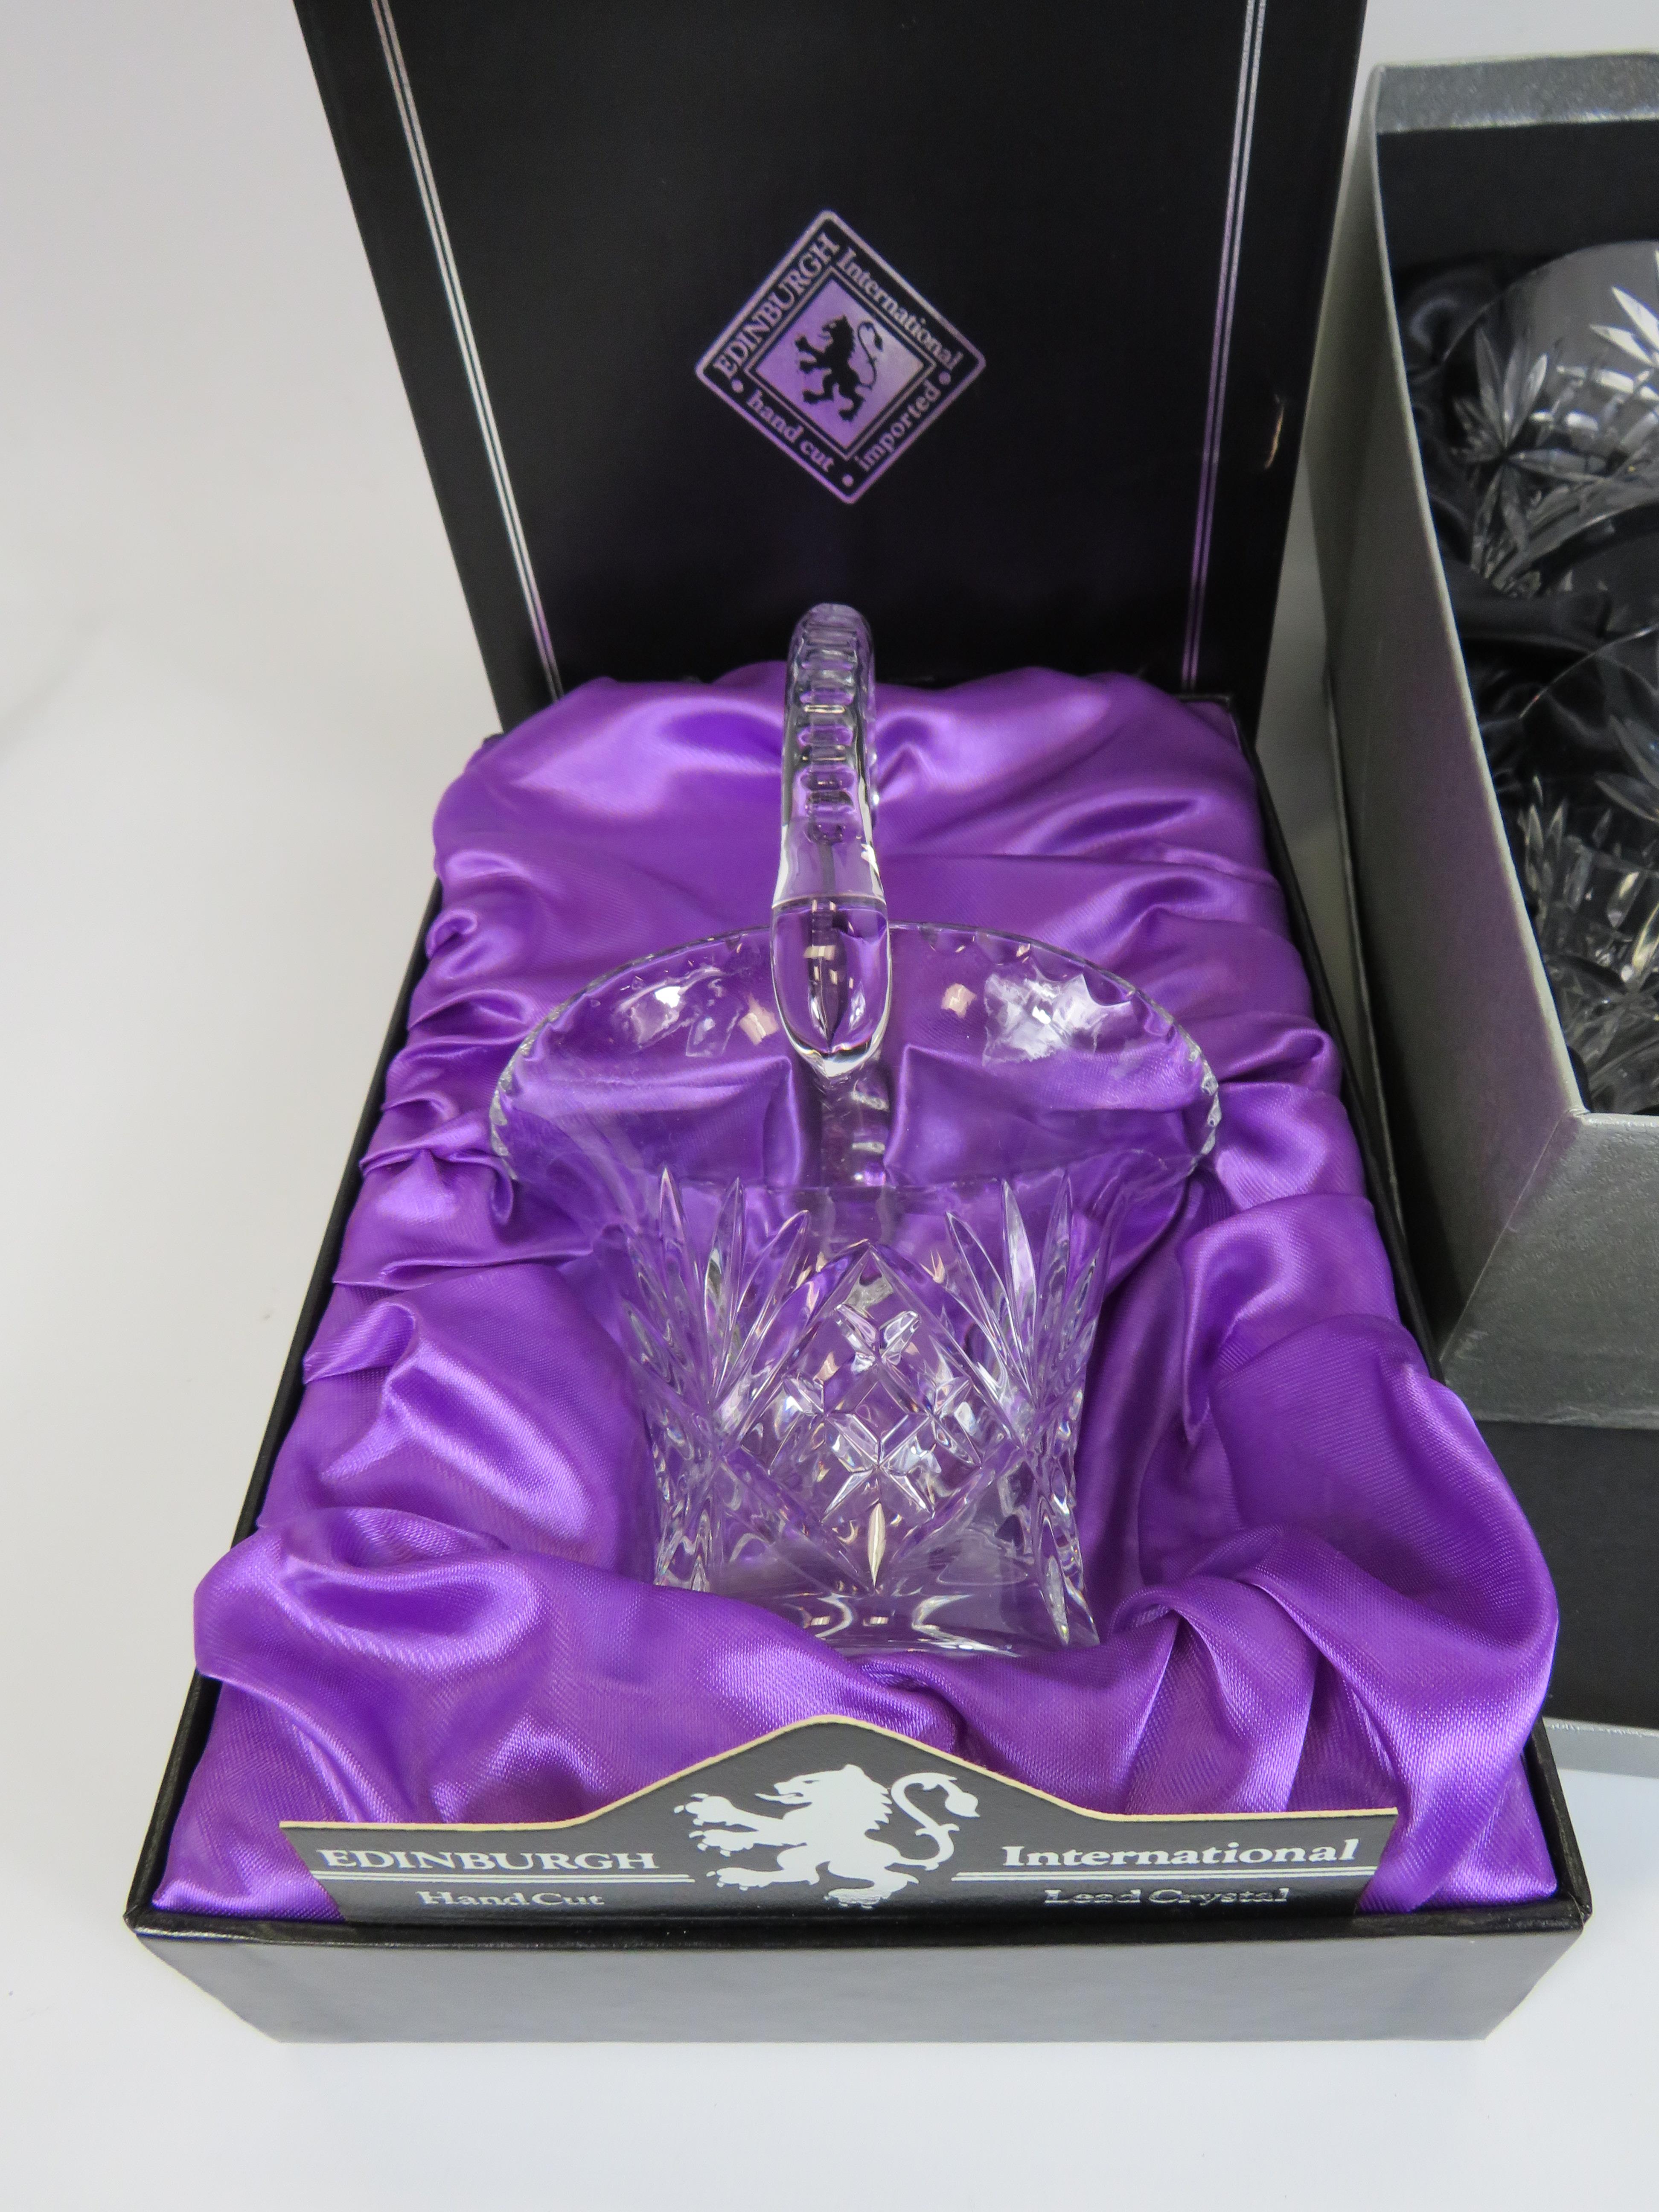 Vernoa crystal decanter and glass set plus a Edinburgh crystal basket both boxed. - Image 3 of 3